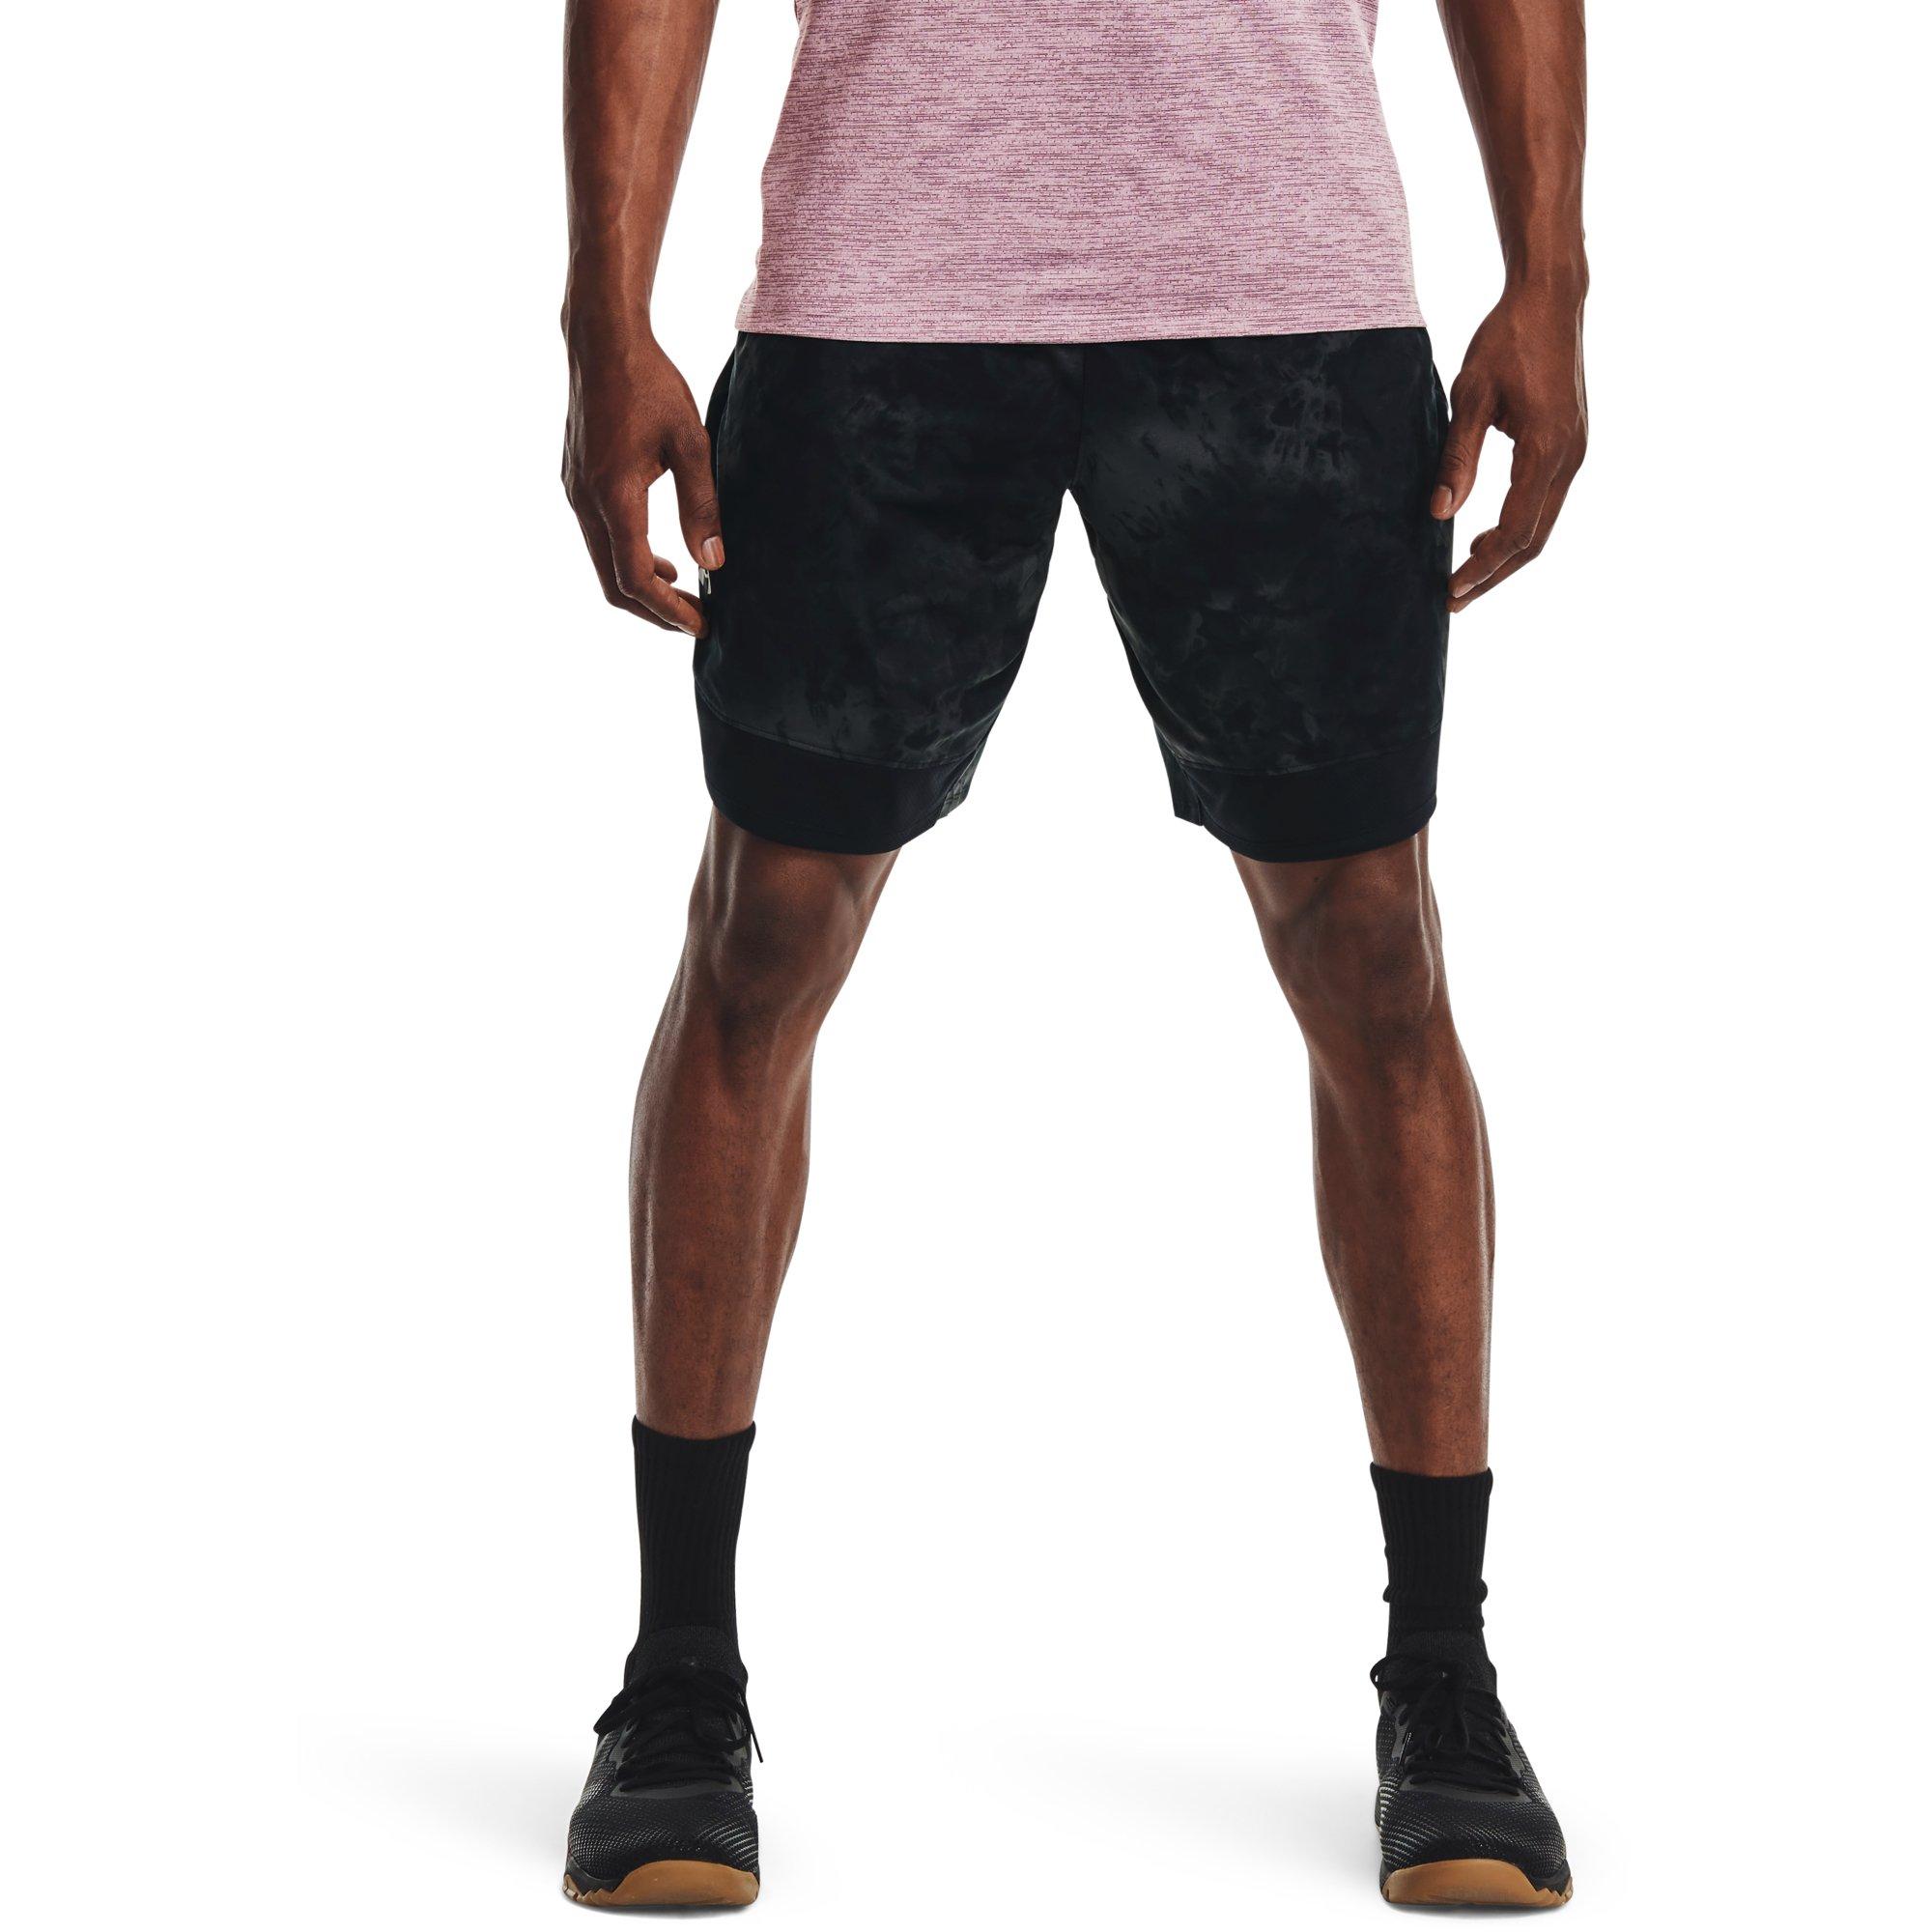 Men's Athletic Shorts, Gym & Workout Apparel - Hibbett